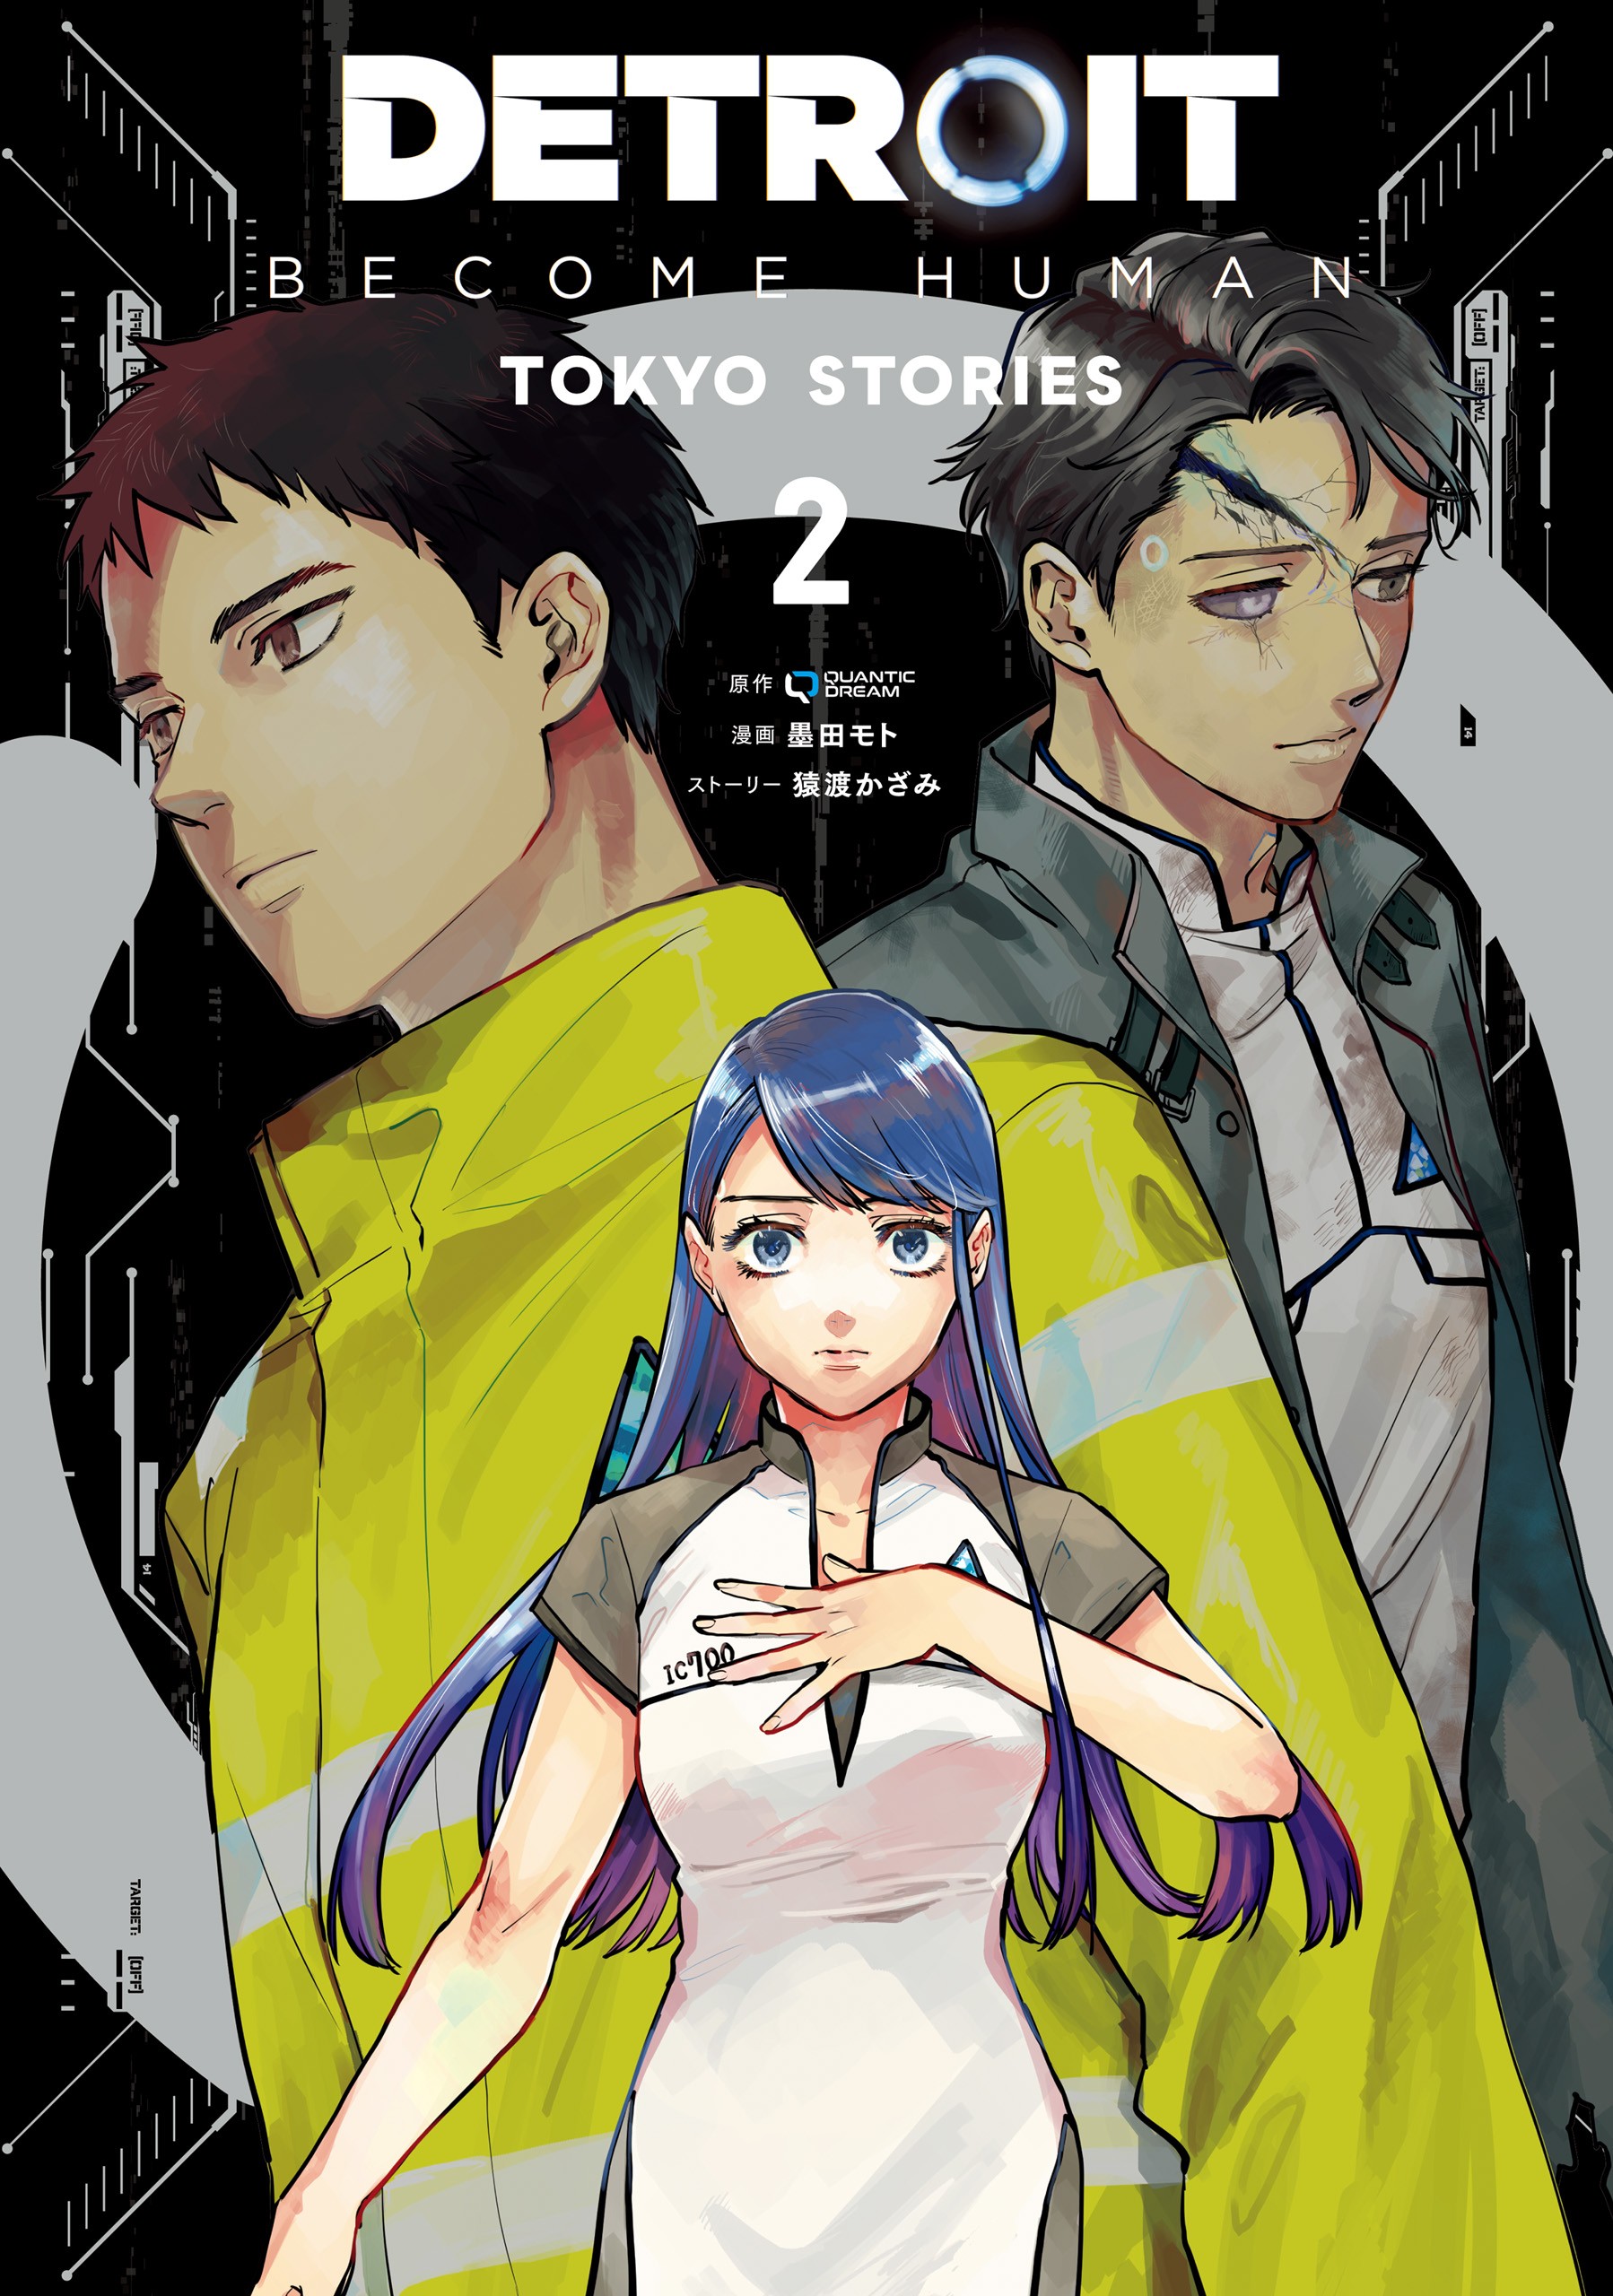 Detroit: Become Human - Tokyo Stories - MangaDex